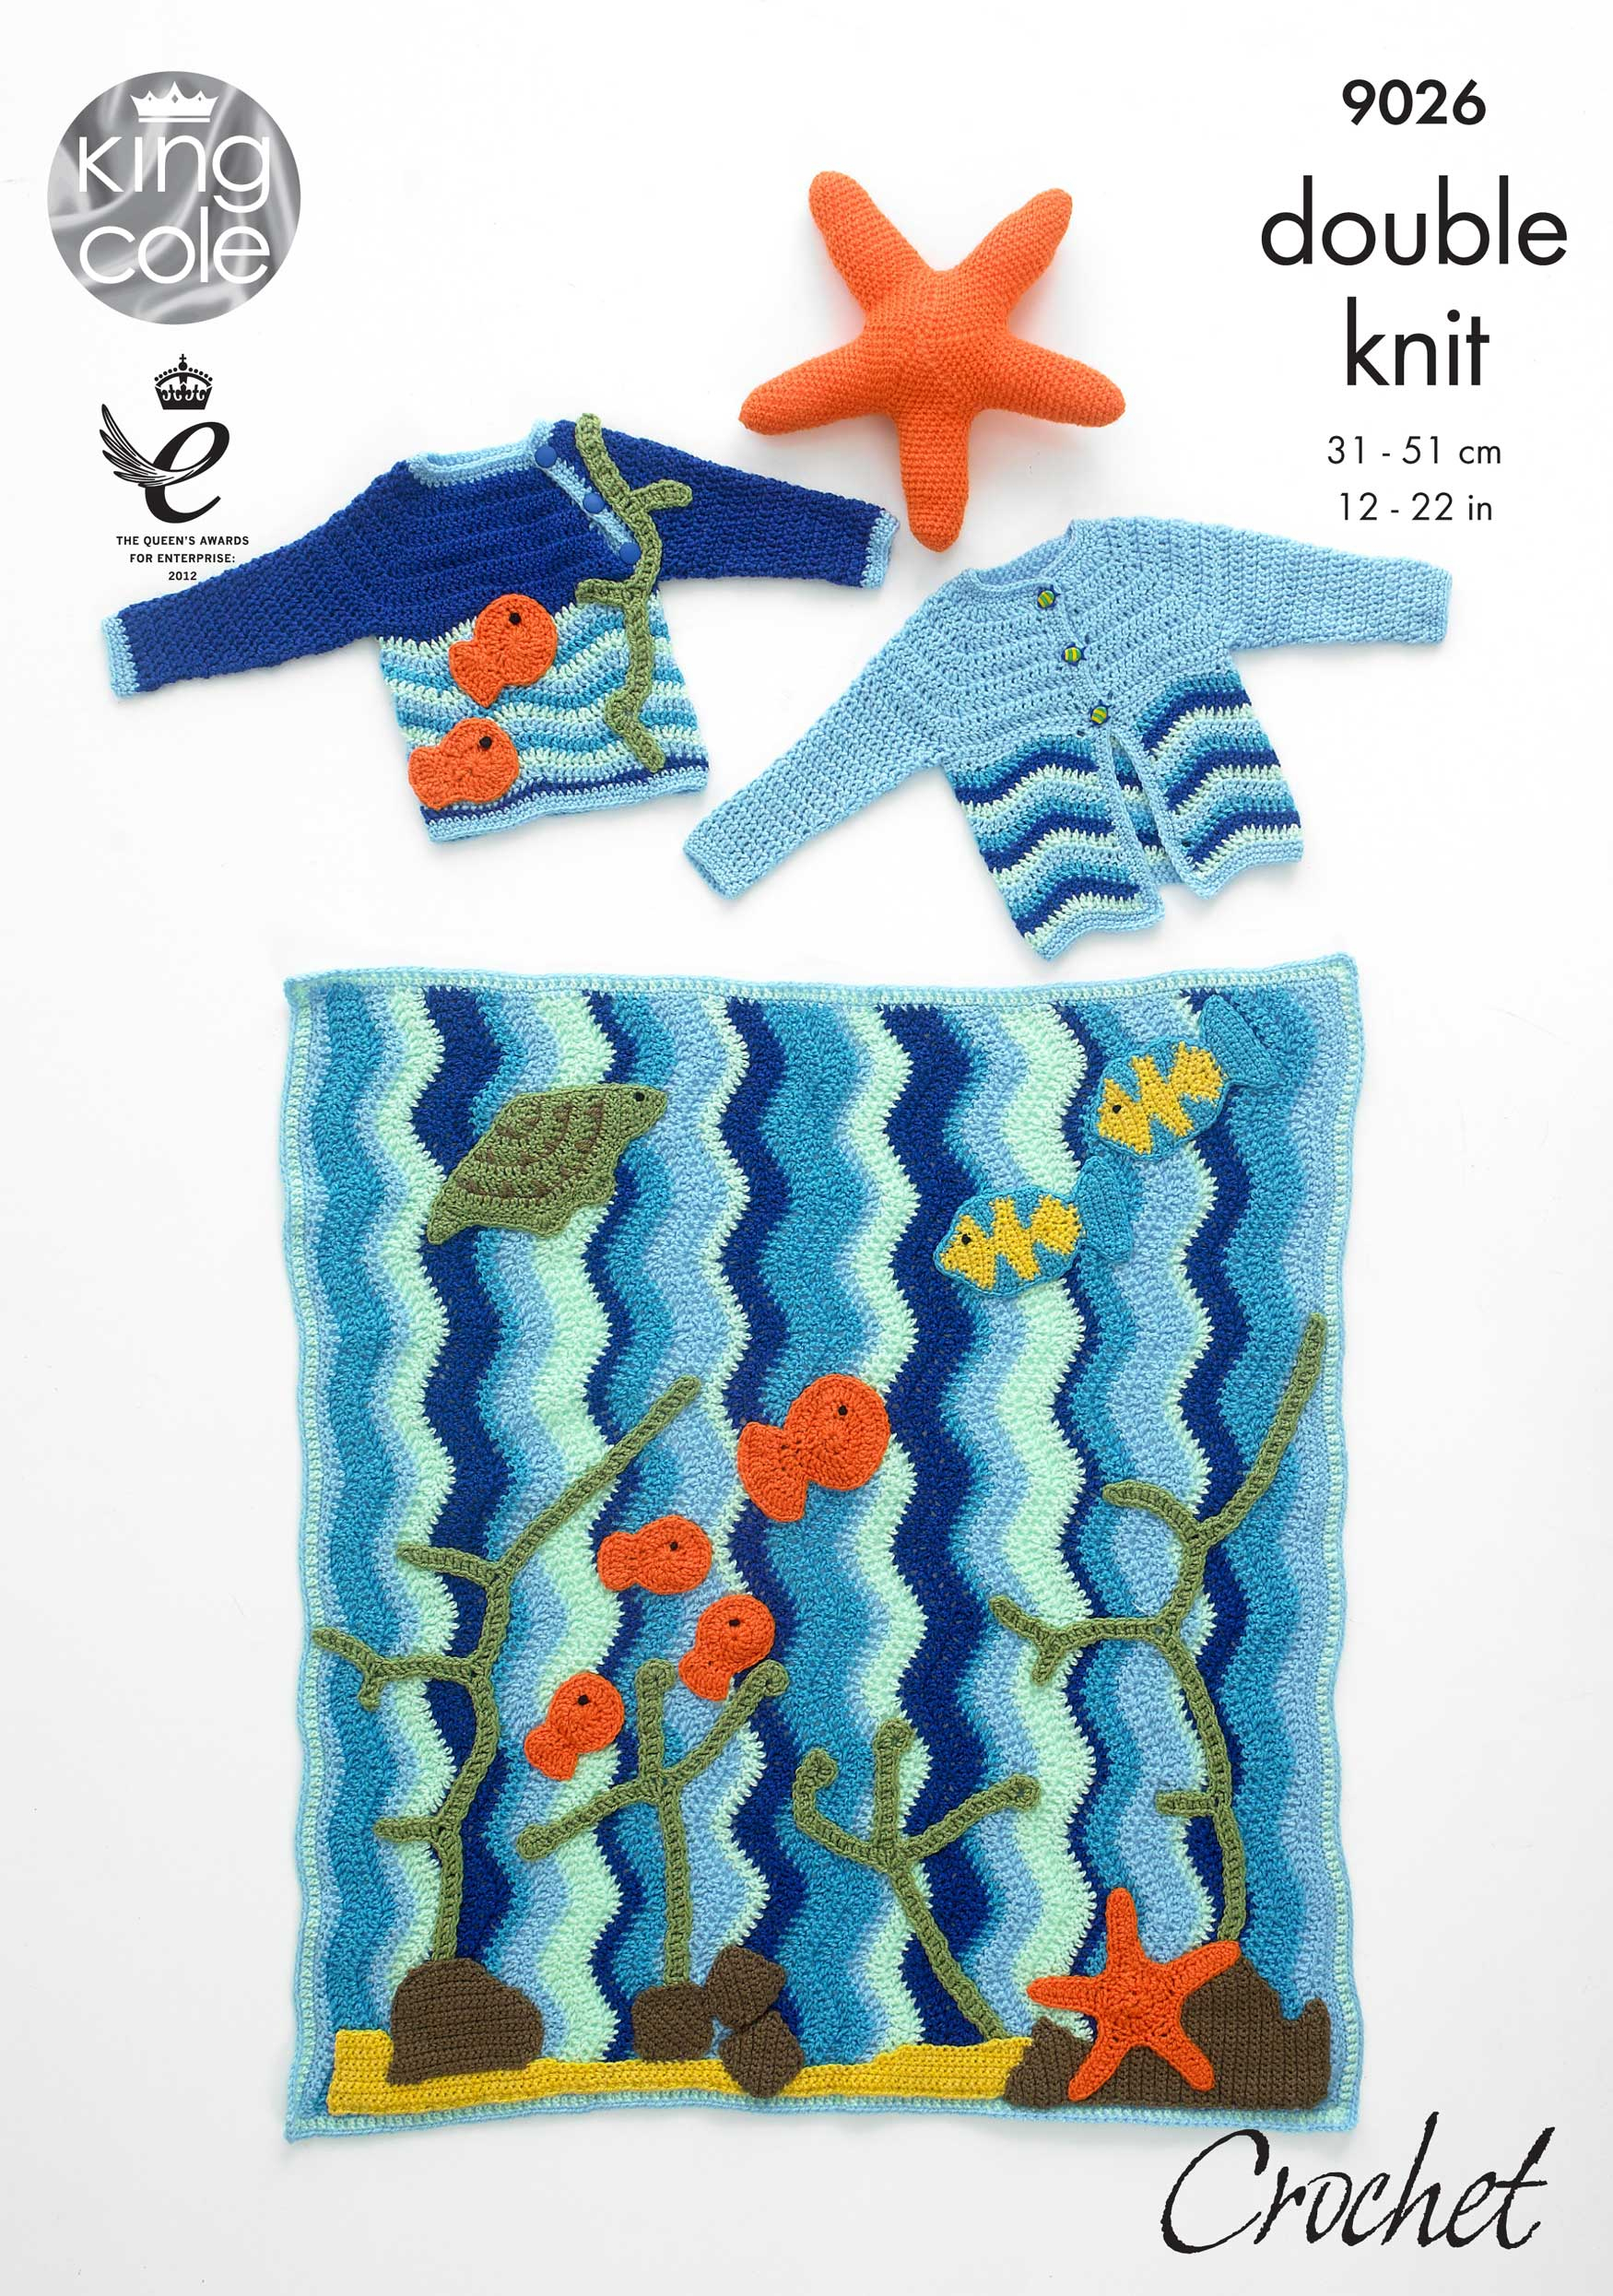 Fish Knitting Pattern Free Details About King Cole Sea Fish Crochet Pattern Blanket Sweater Cardigan Starfish Toy 9026